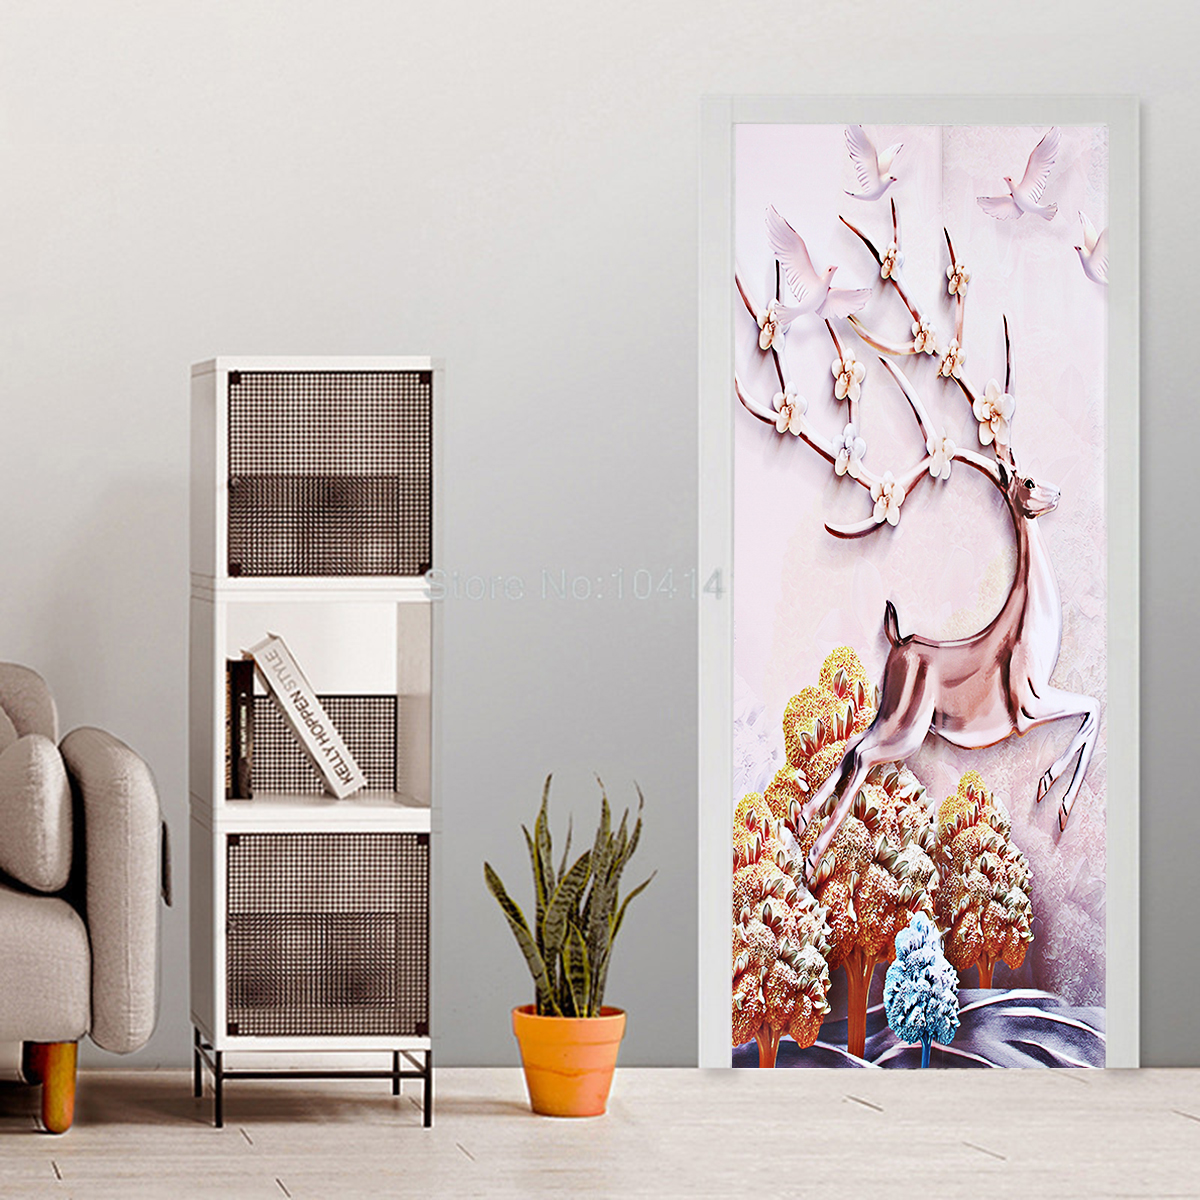 3D-Door-Wall-Sticker-Fridge-Deer-Sticker-Wrap-Mural-Decal-Art-Decor-Self-Adhesive-Room-1407108-5